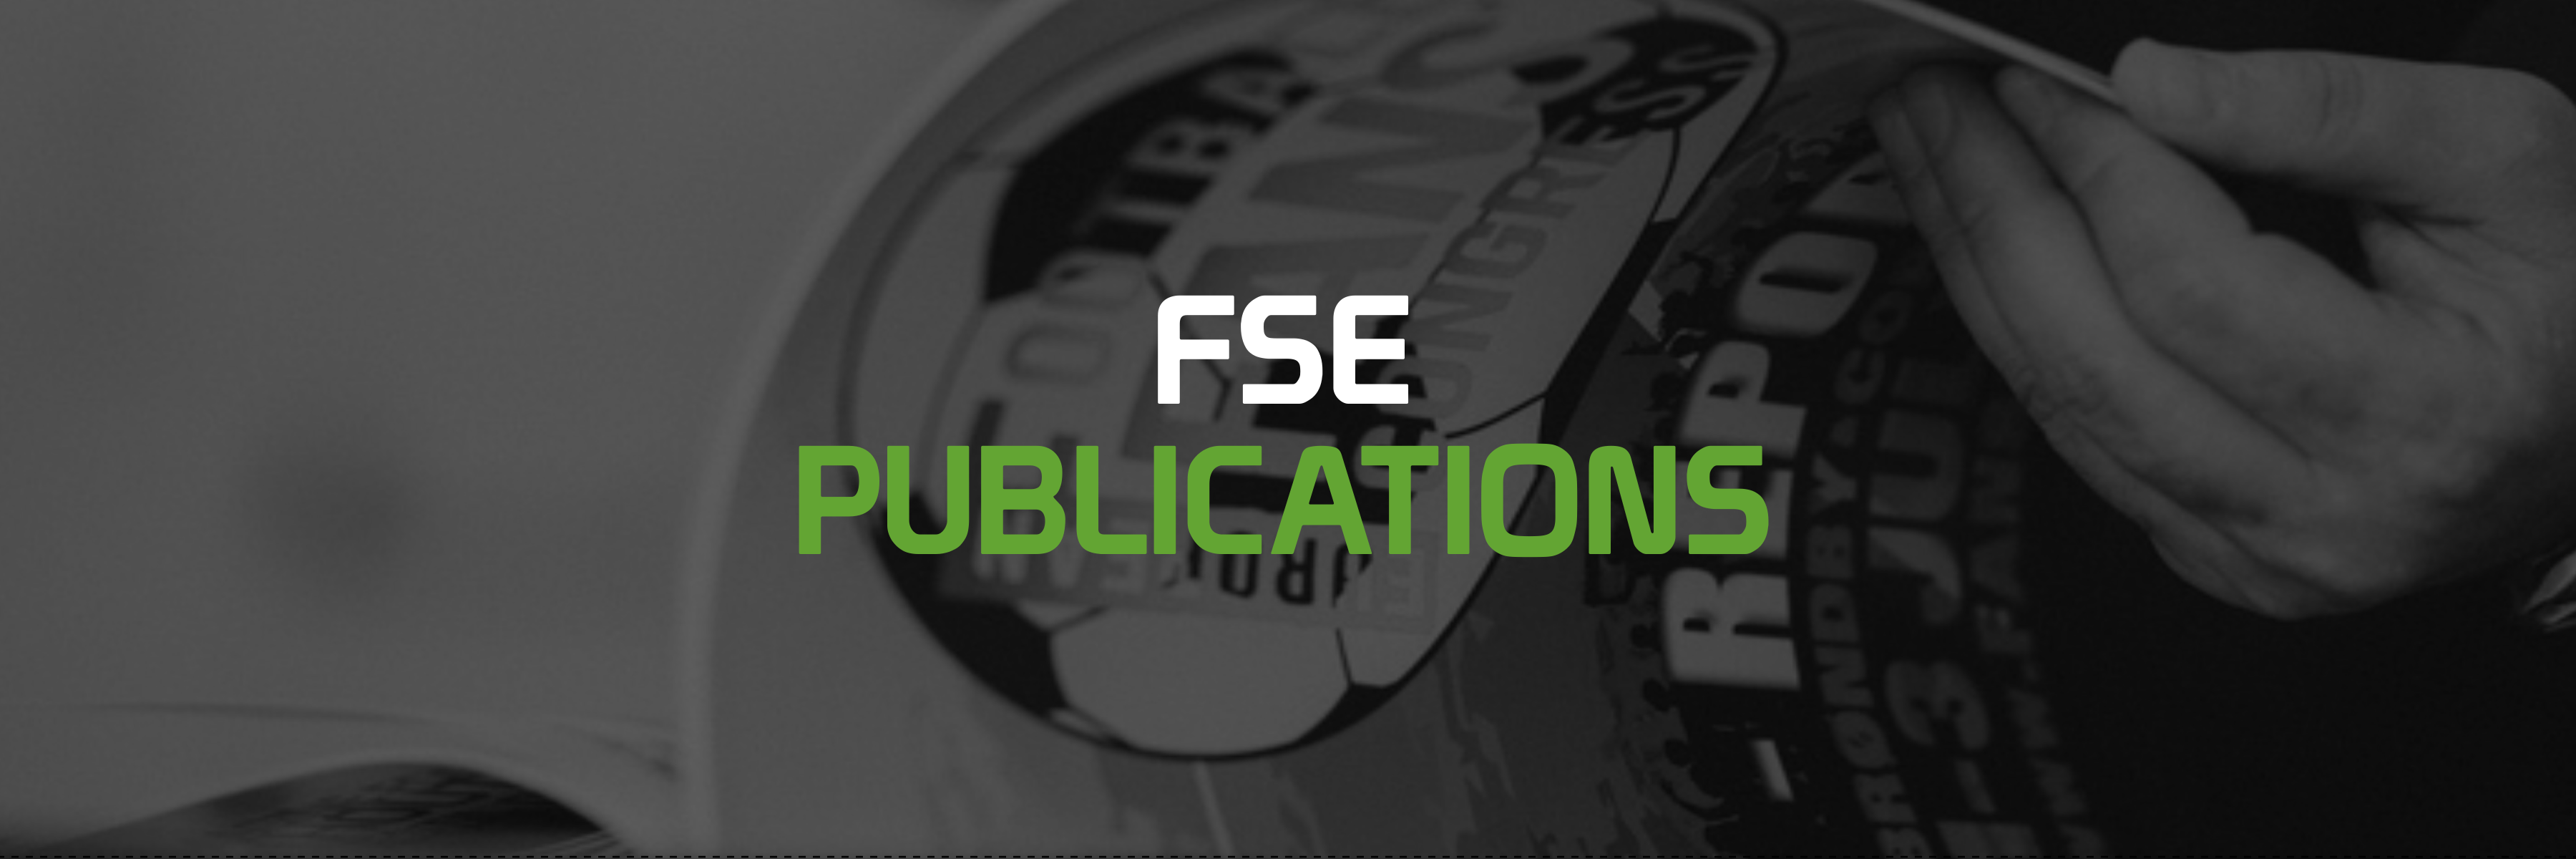 FSE Publications Banner